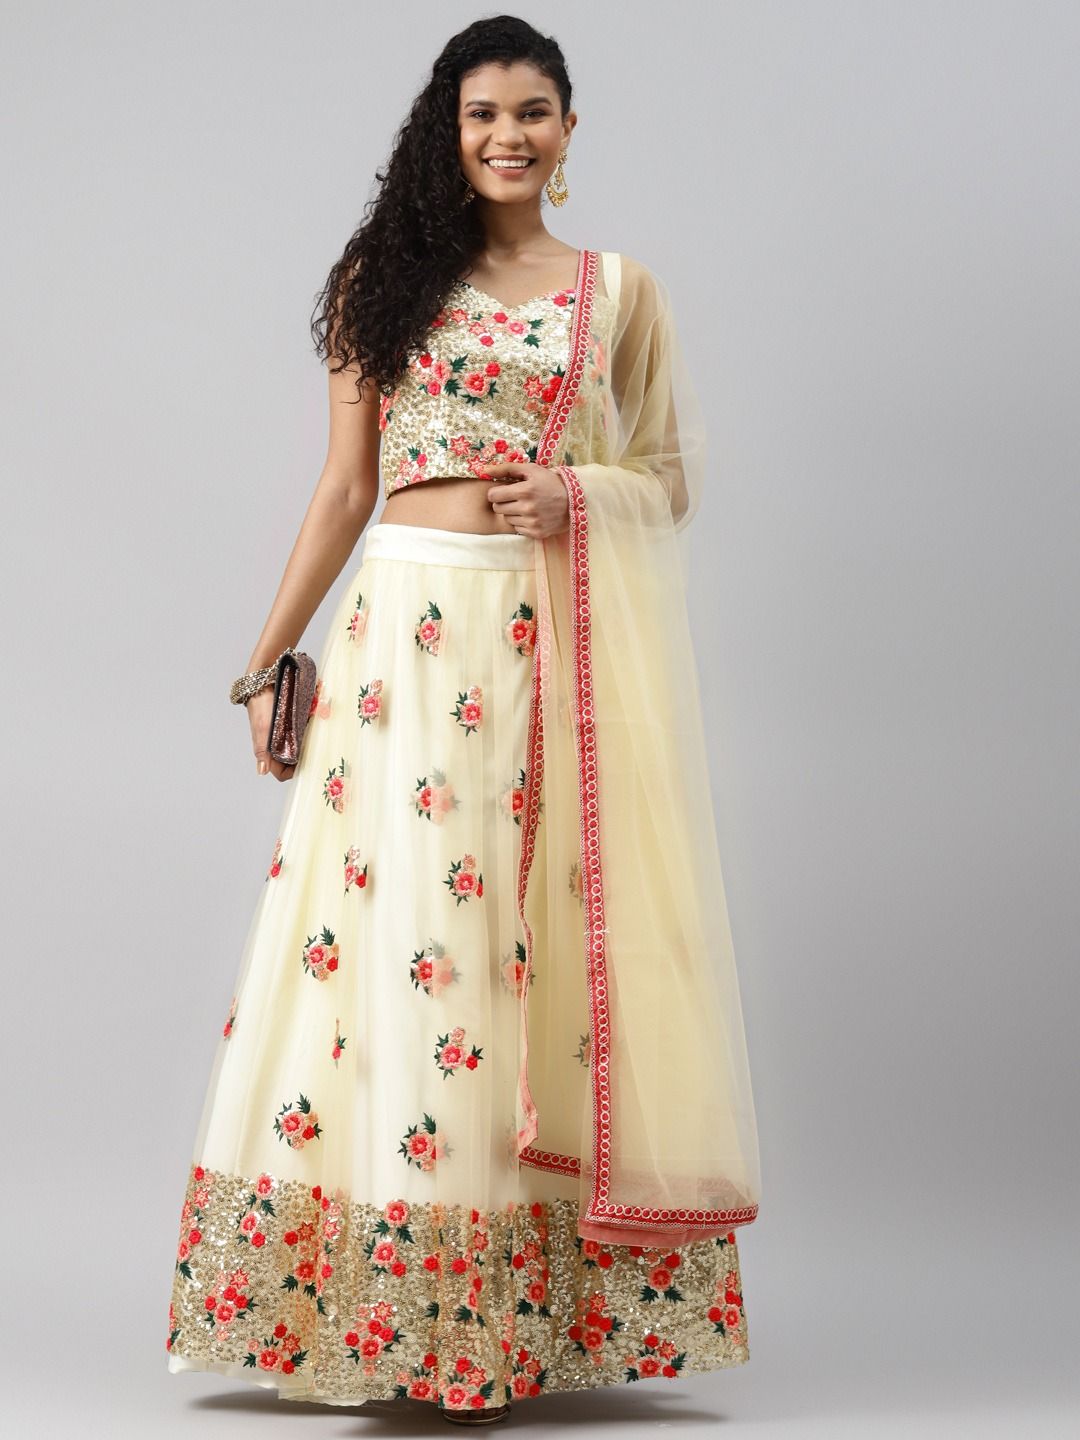 Net Semi-Stitched Cream Color Bridal Lehenga Choli, Size: Free Size, Lehenga ,Blouse & Dupatta at Rs 6490 in Surat